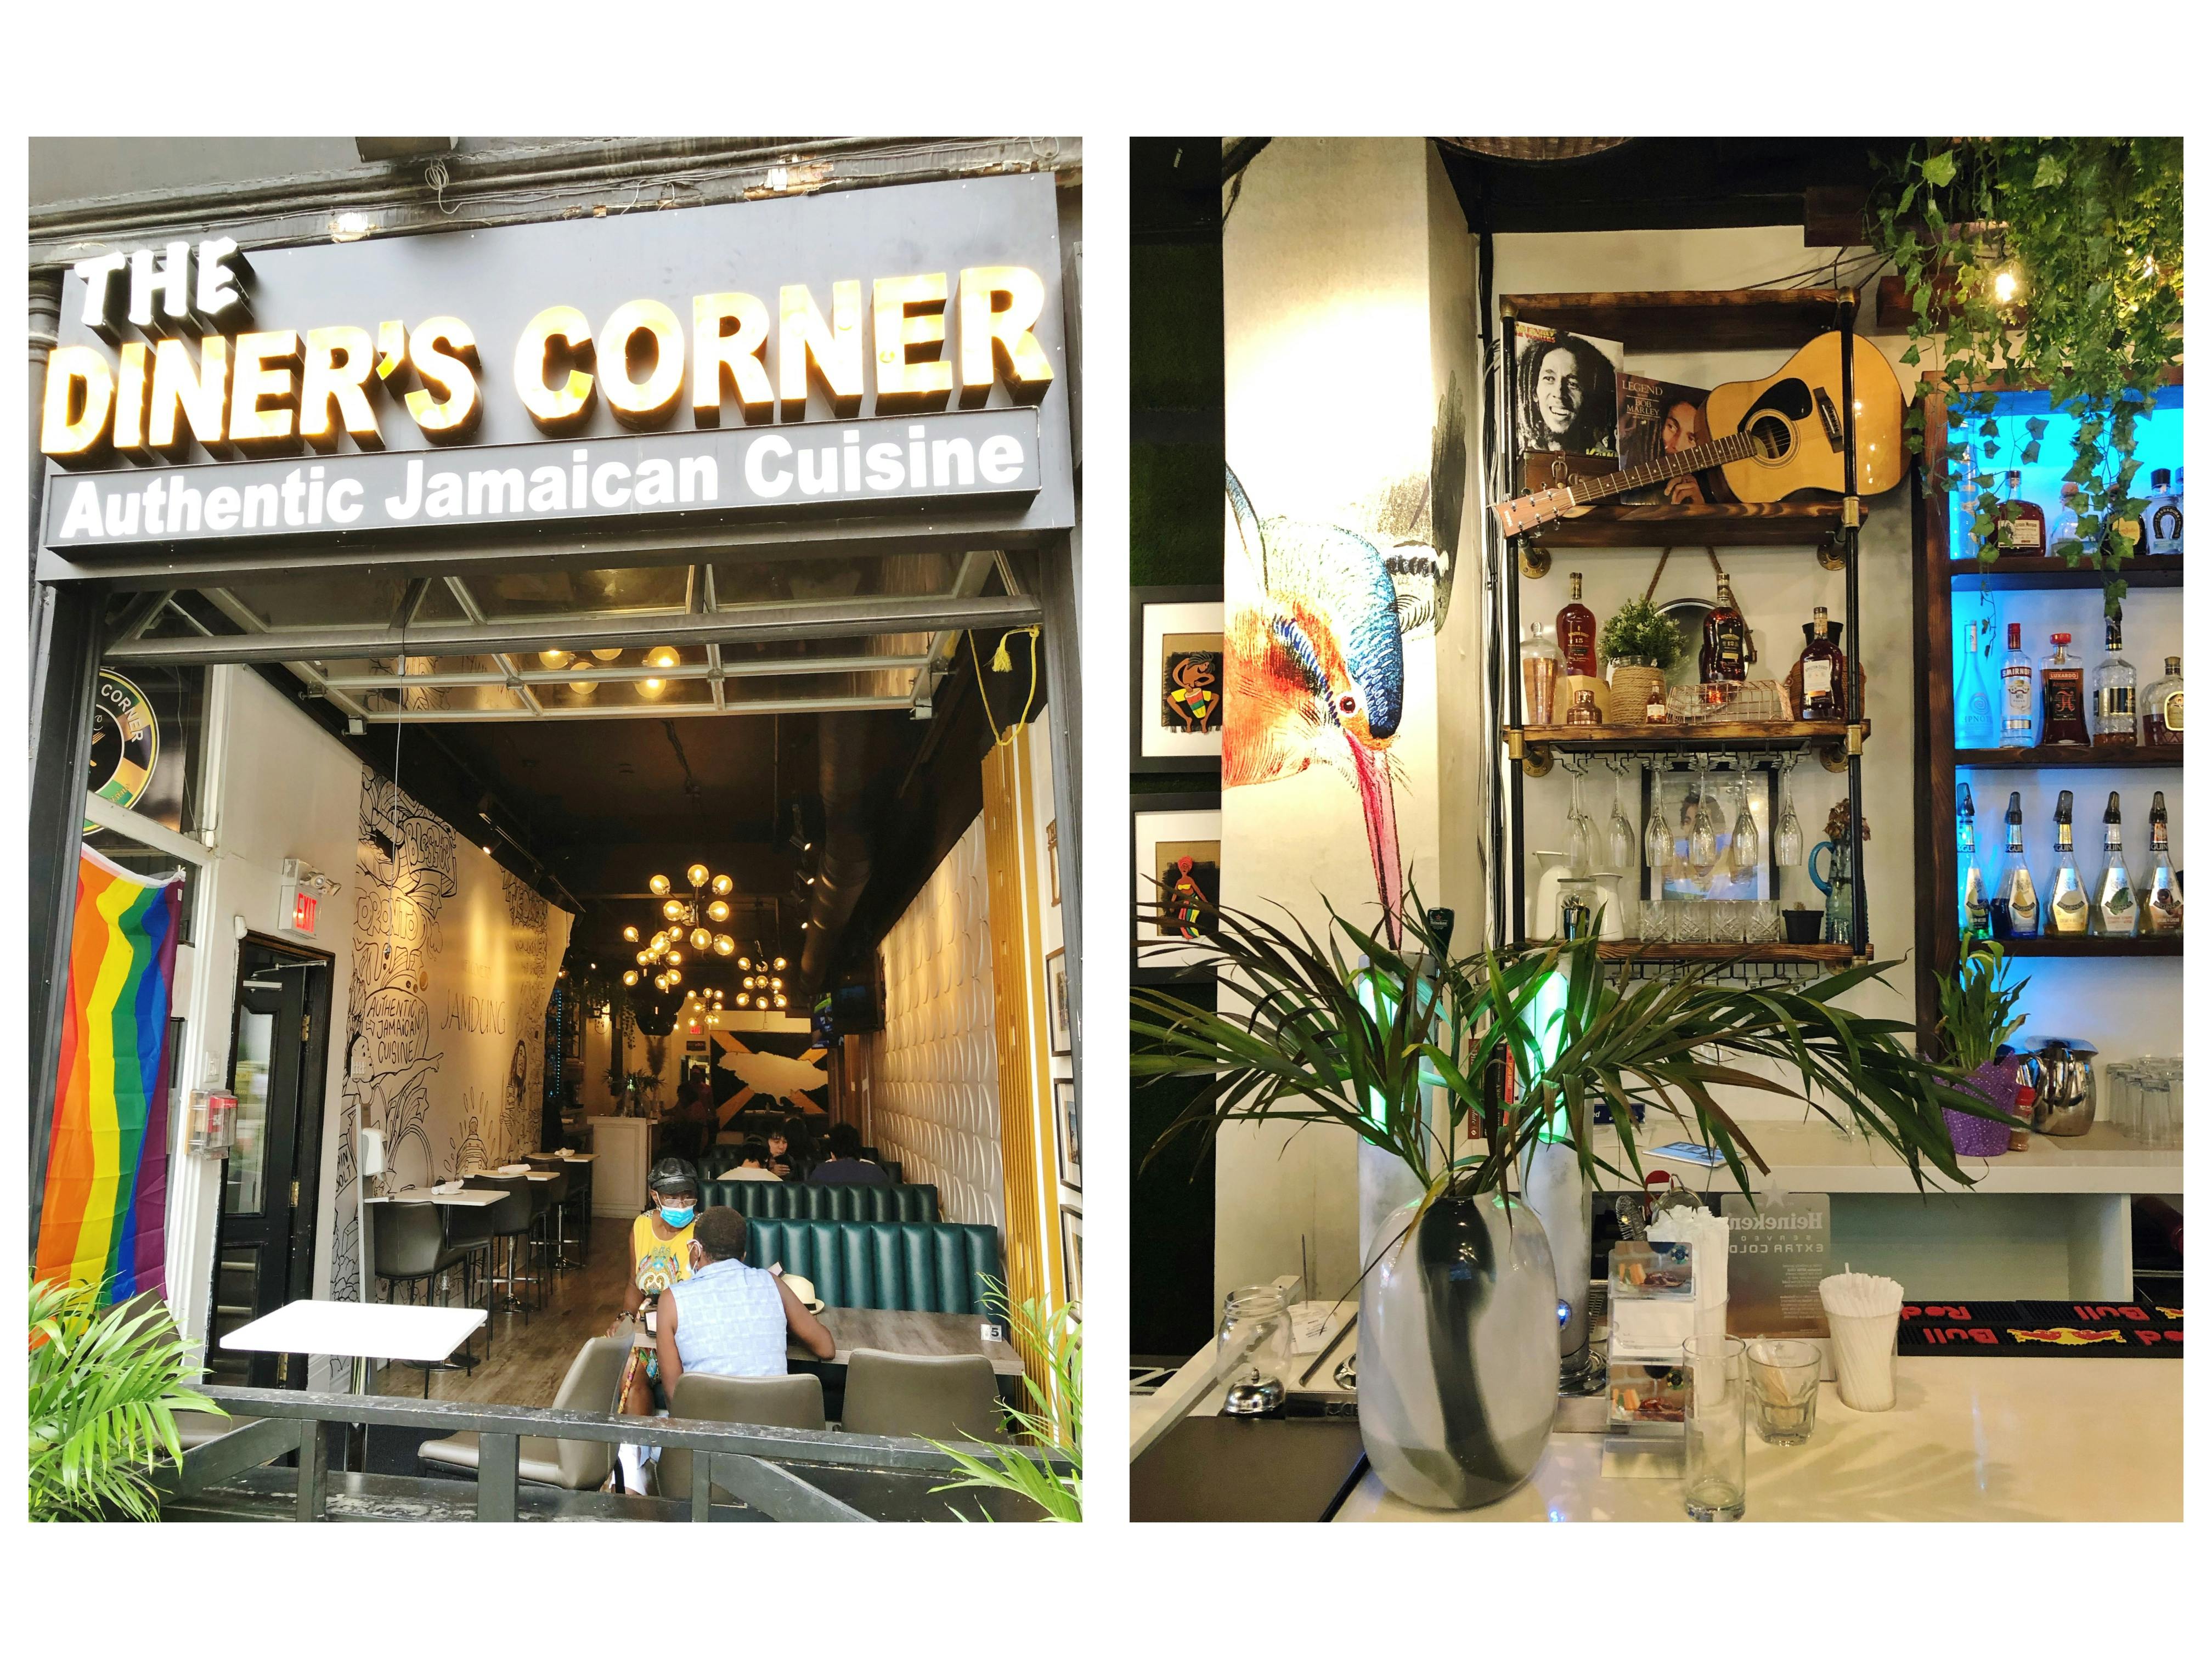 The Diner's Corner